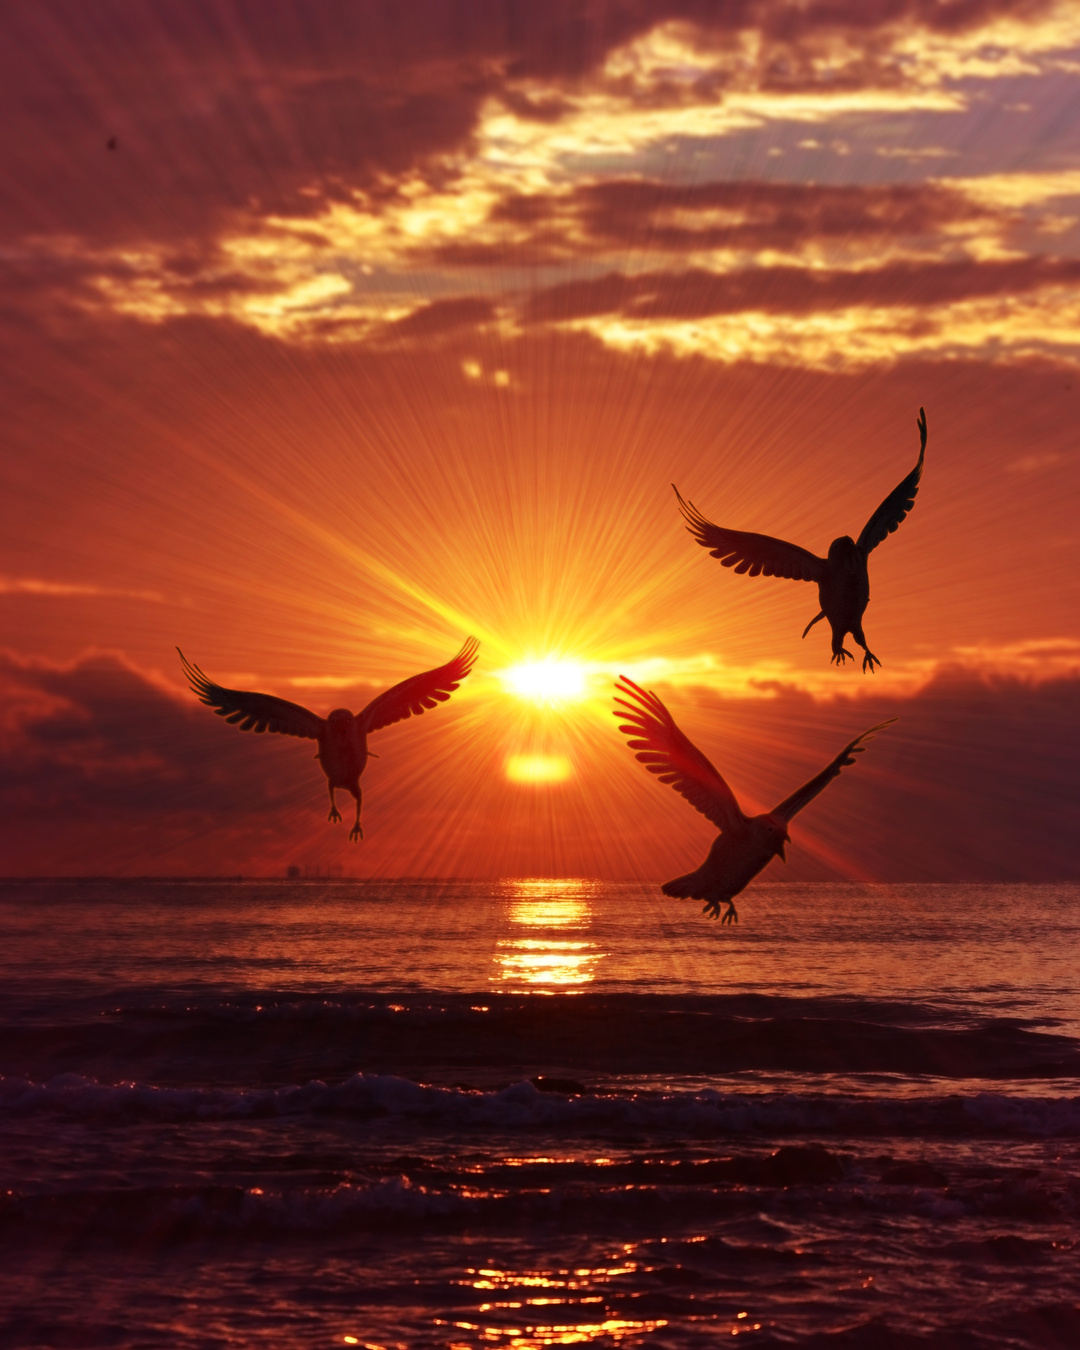 Birds Flying in the Beach Sunset